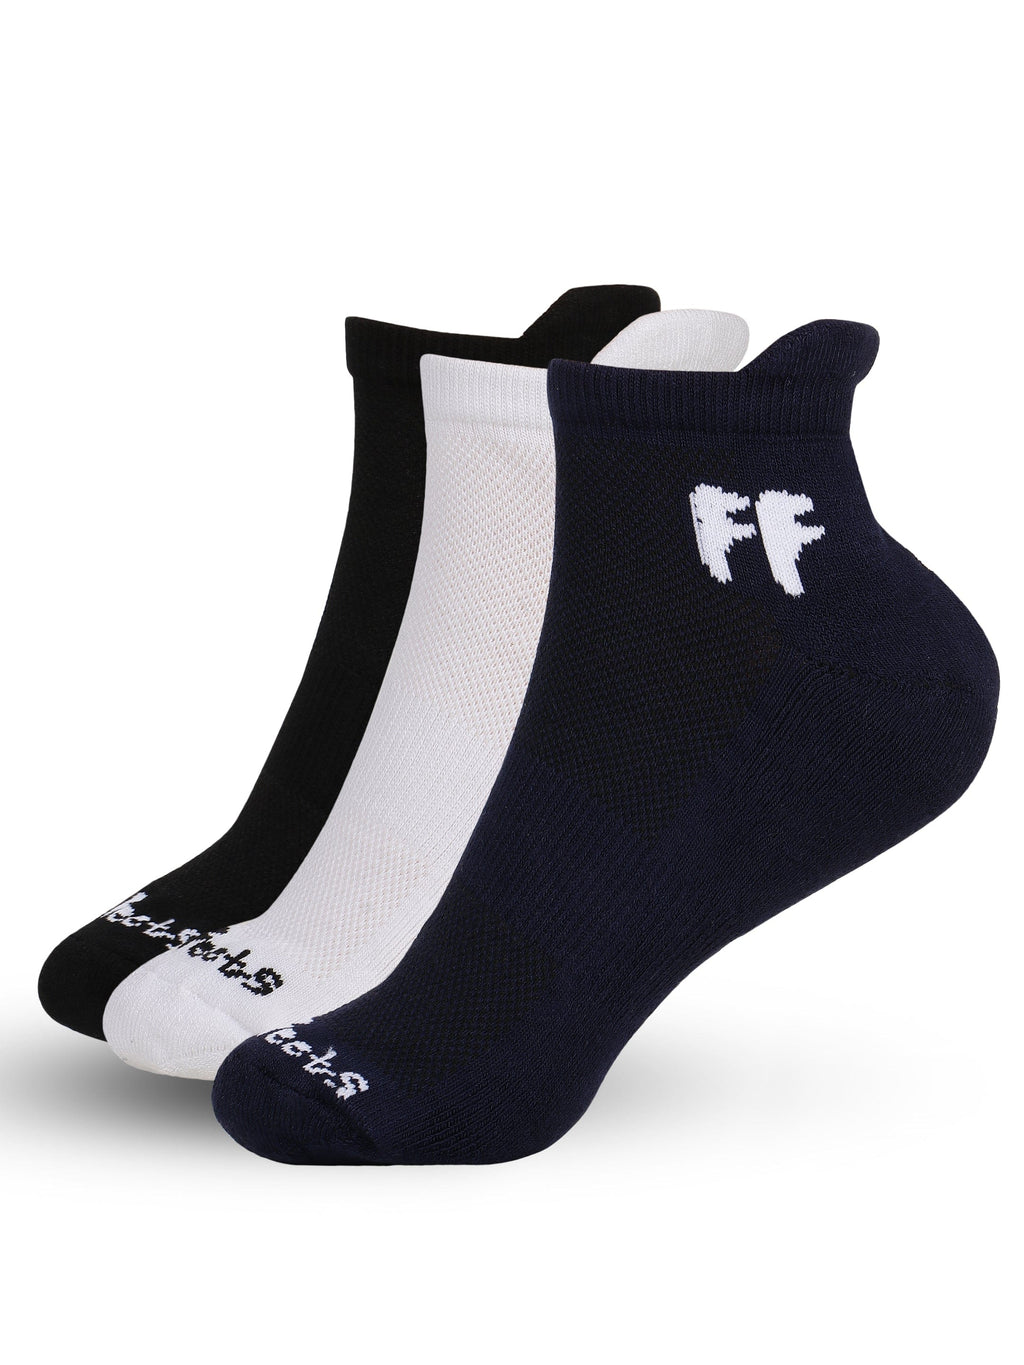 Funkfeets Bamboo Socks- Pack Of 3 (White, Black, Navy Blue)